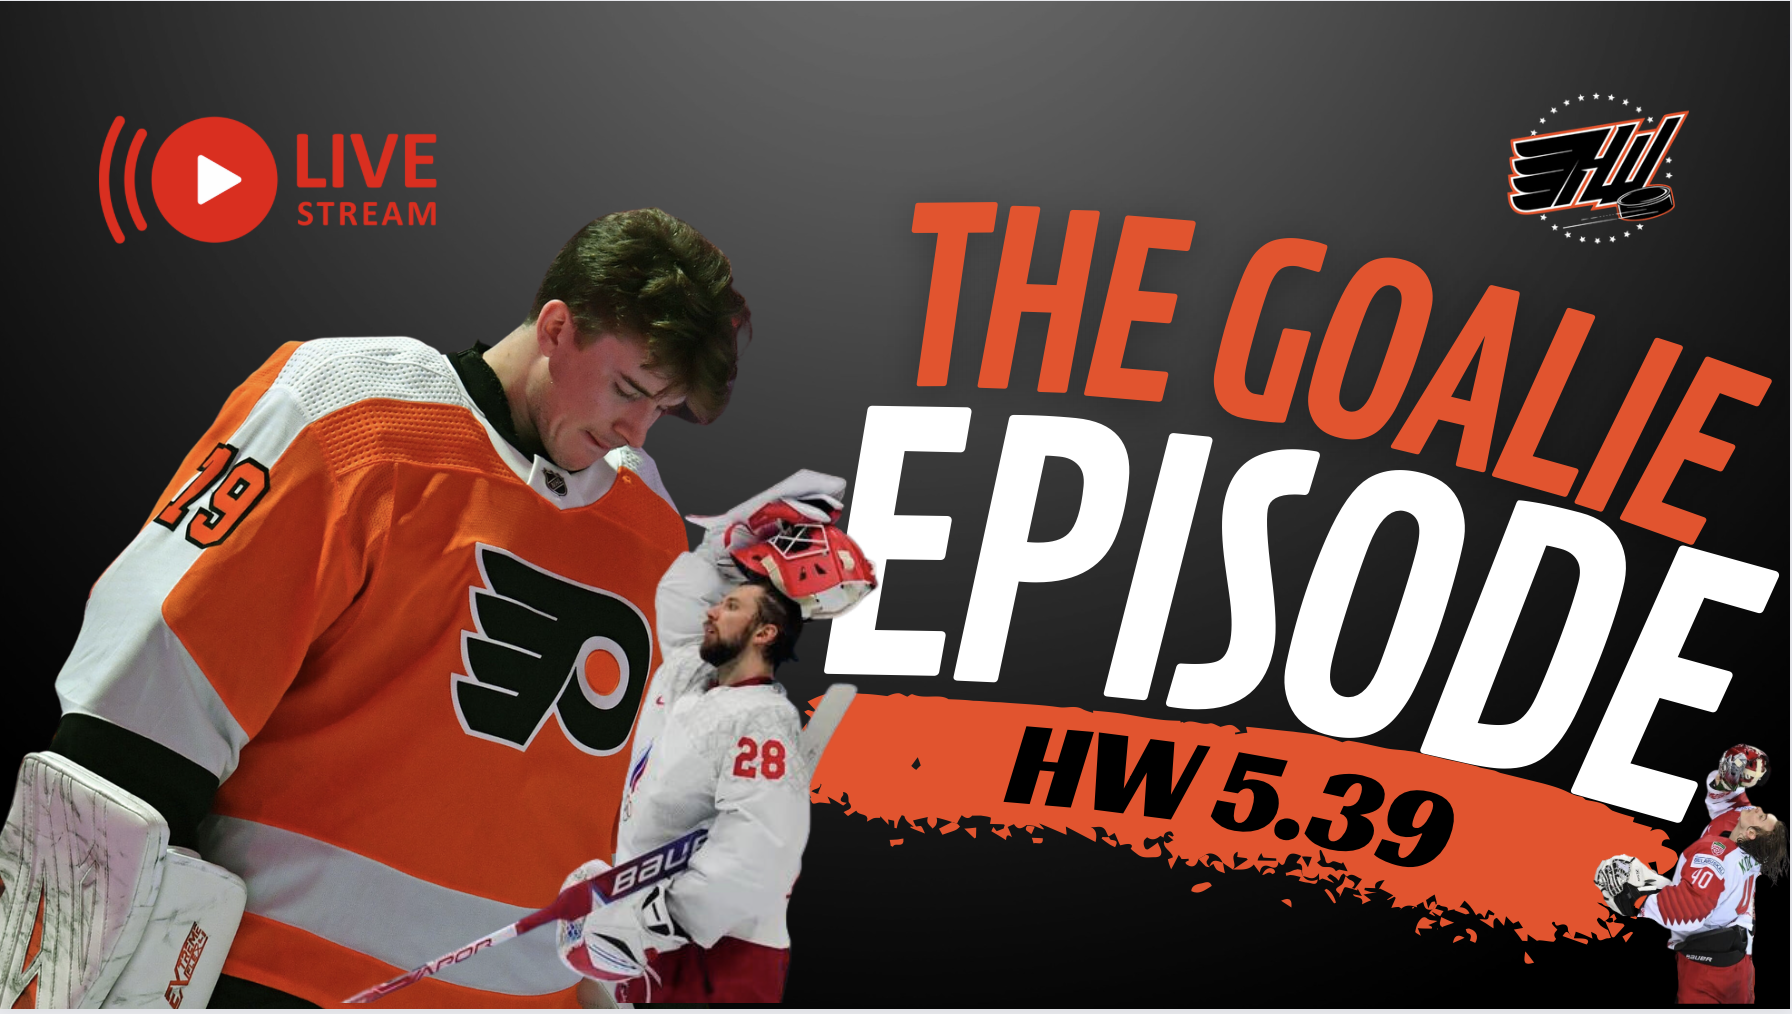 The Goalie Episode | HW 5.39 post thumbnail image